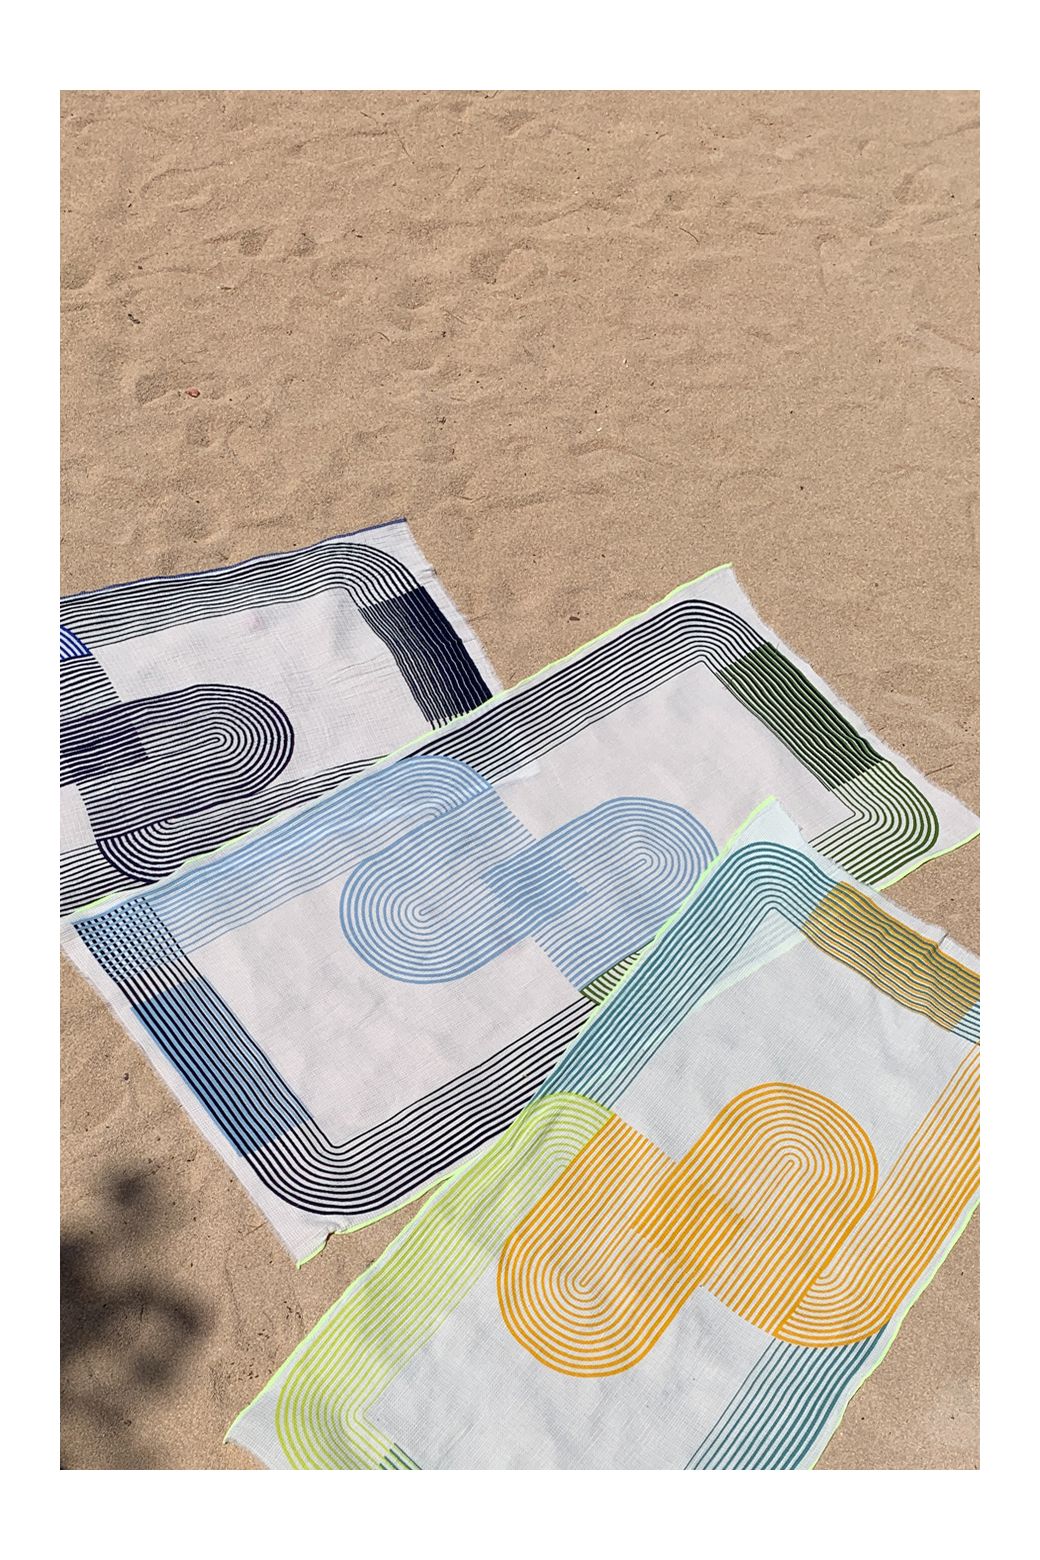 CLOUDY DYLAN BEACH TOWEL